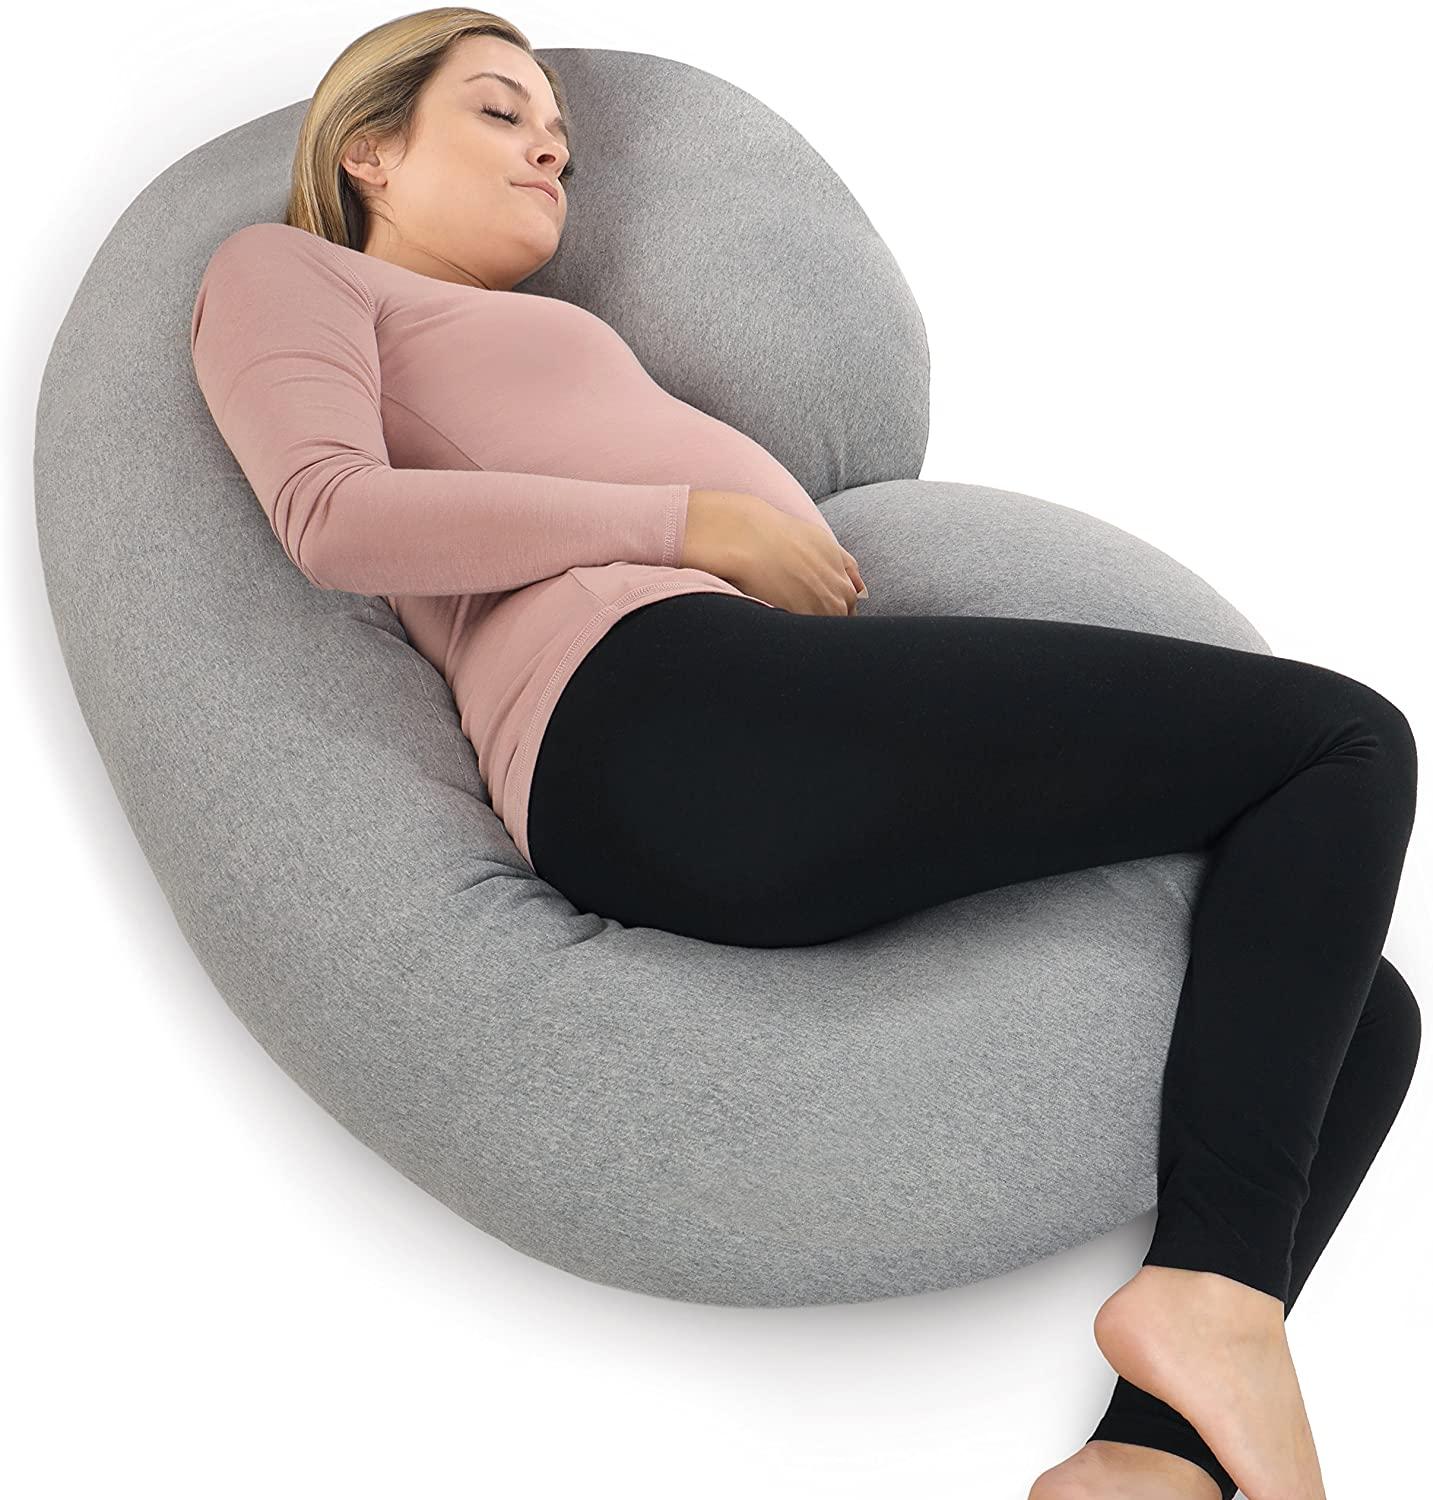 Pregnancy pillows help sleep on a futon while pregnent